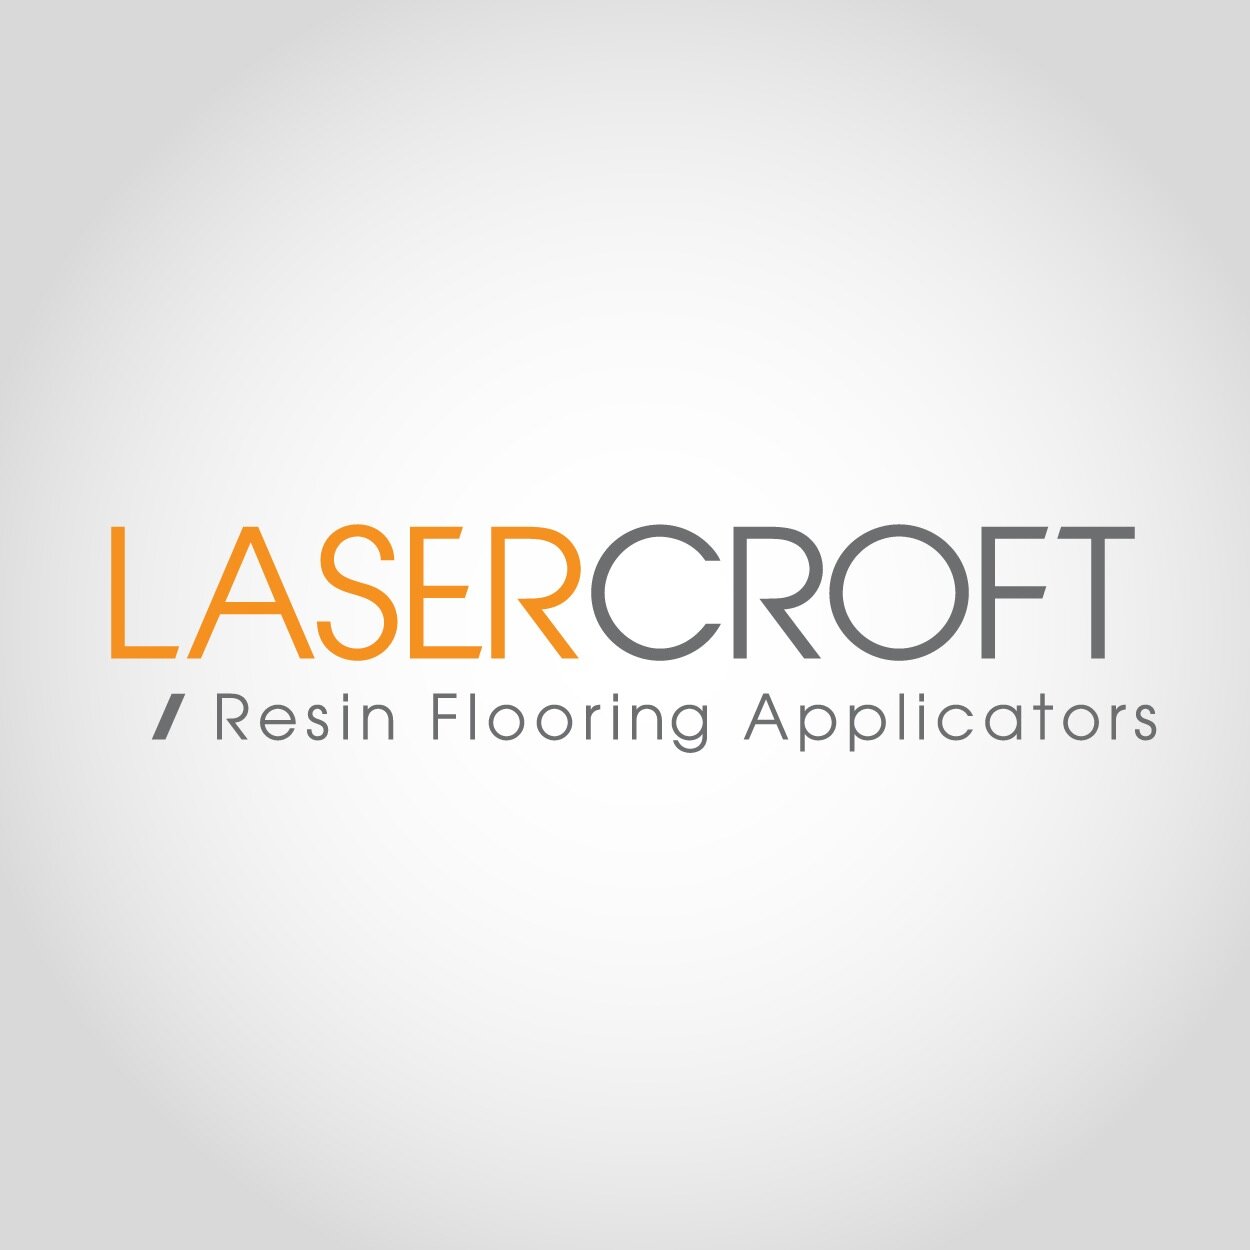 Lasercroft Flooring Profile